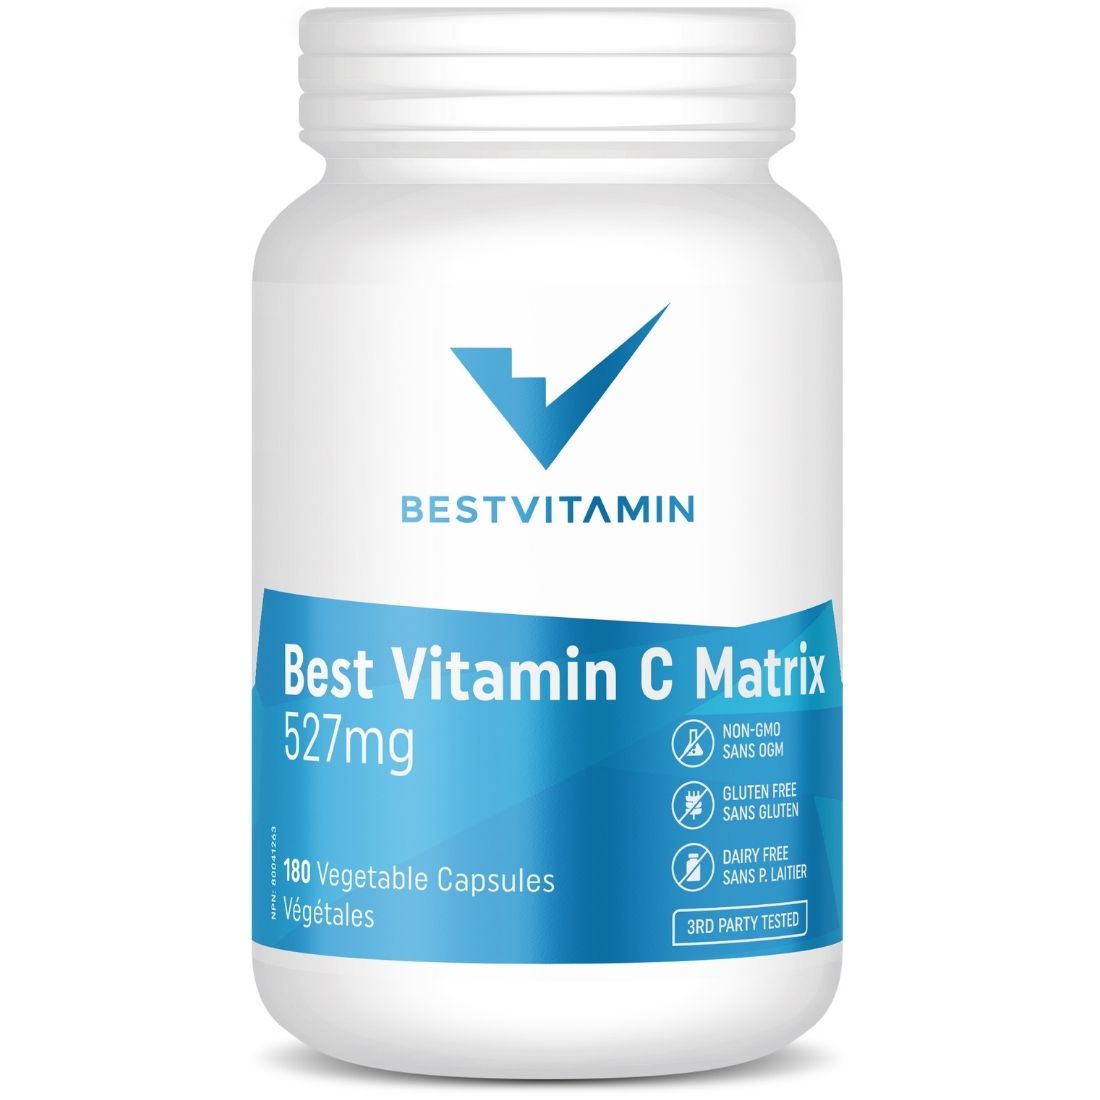 BestVitamin Best Vitamin C Matrix, Enhanced Immune Support & Optimized Absorption